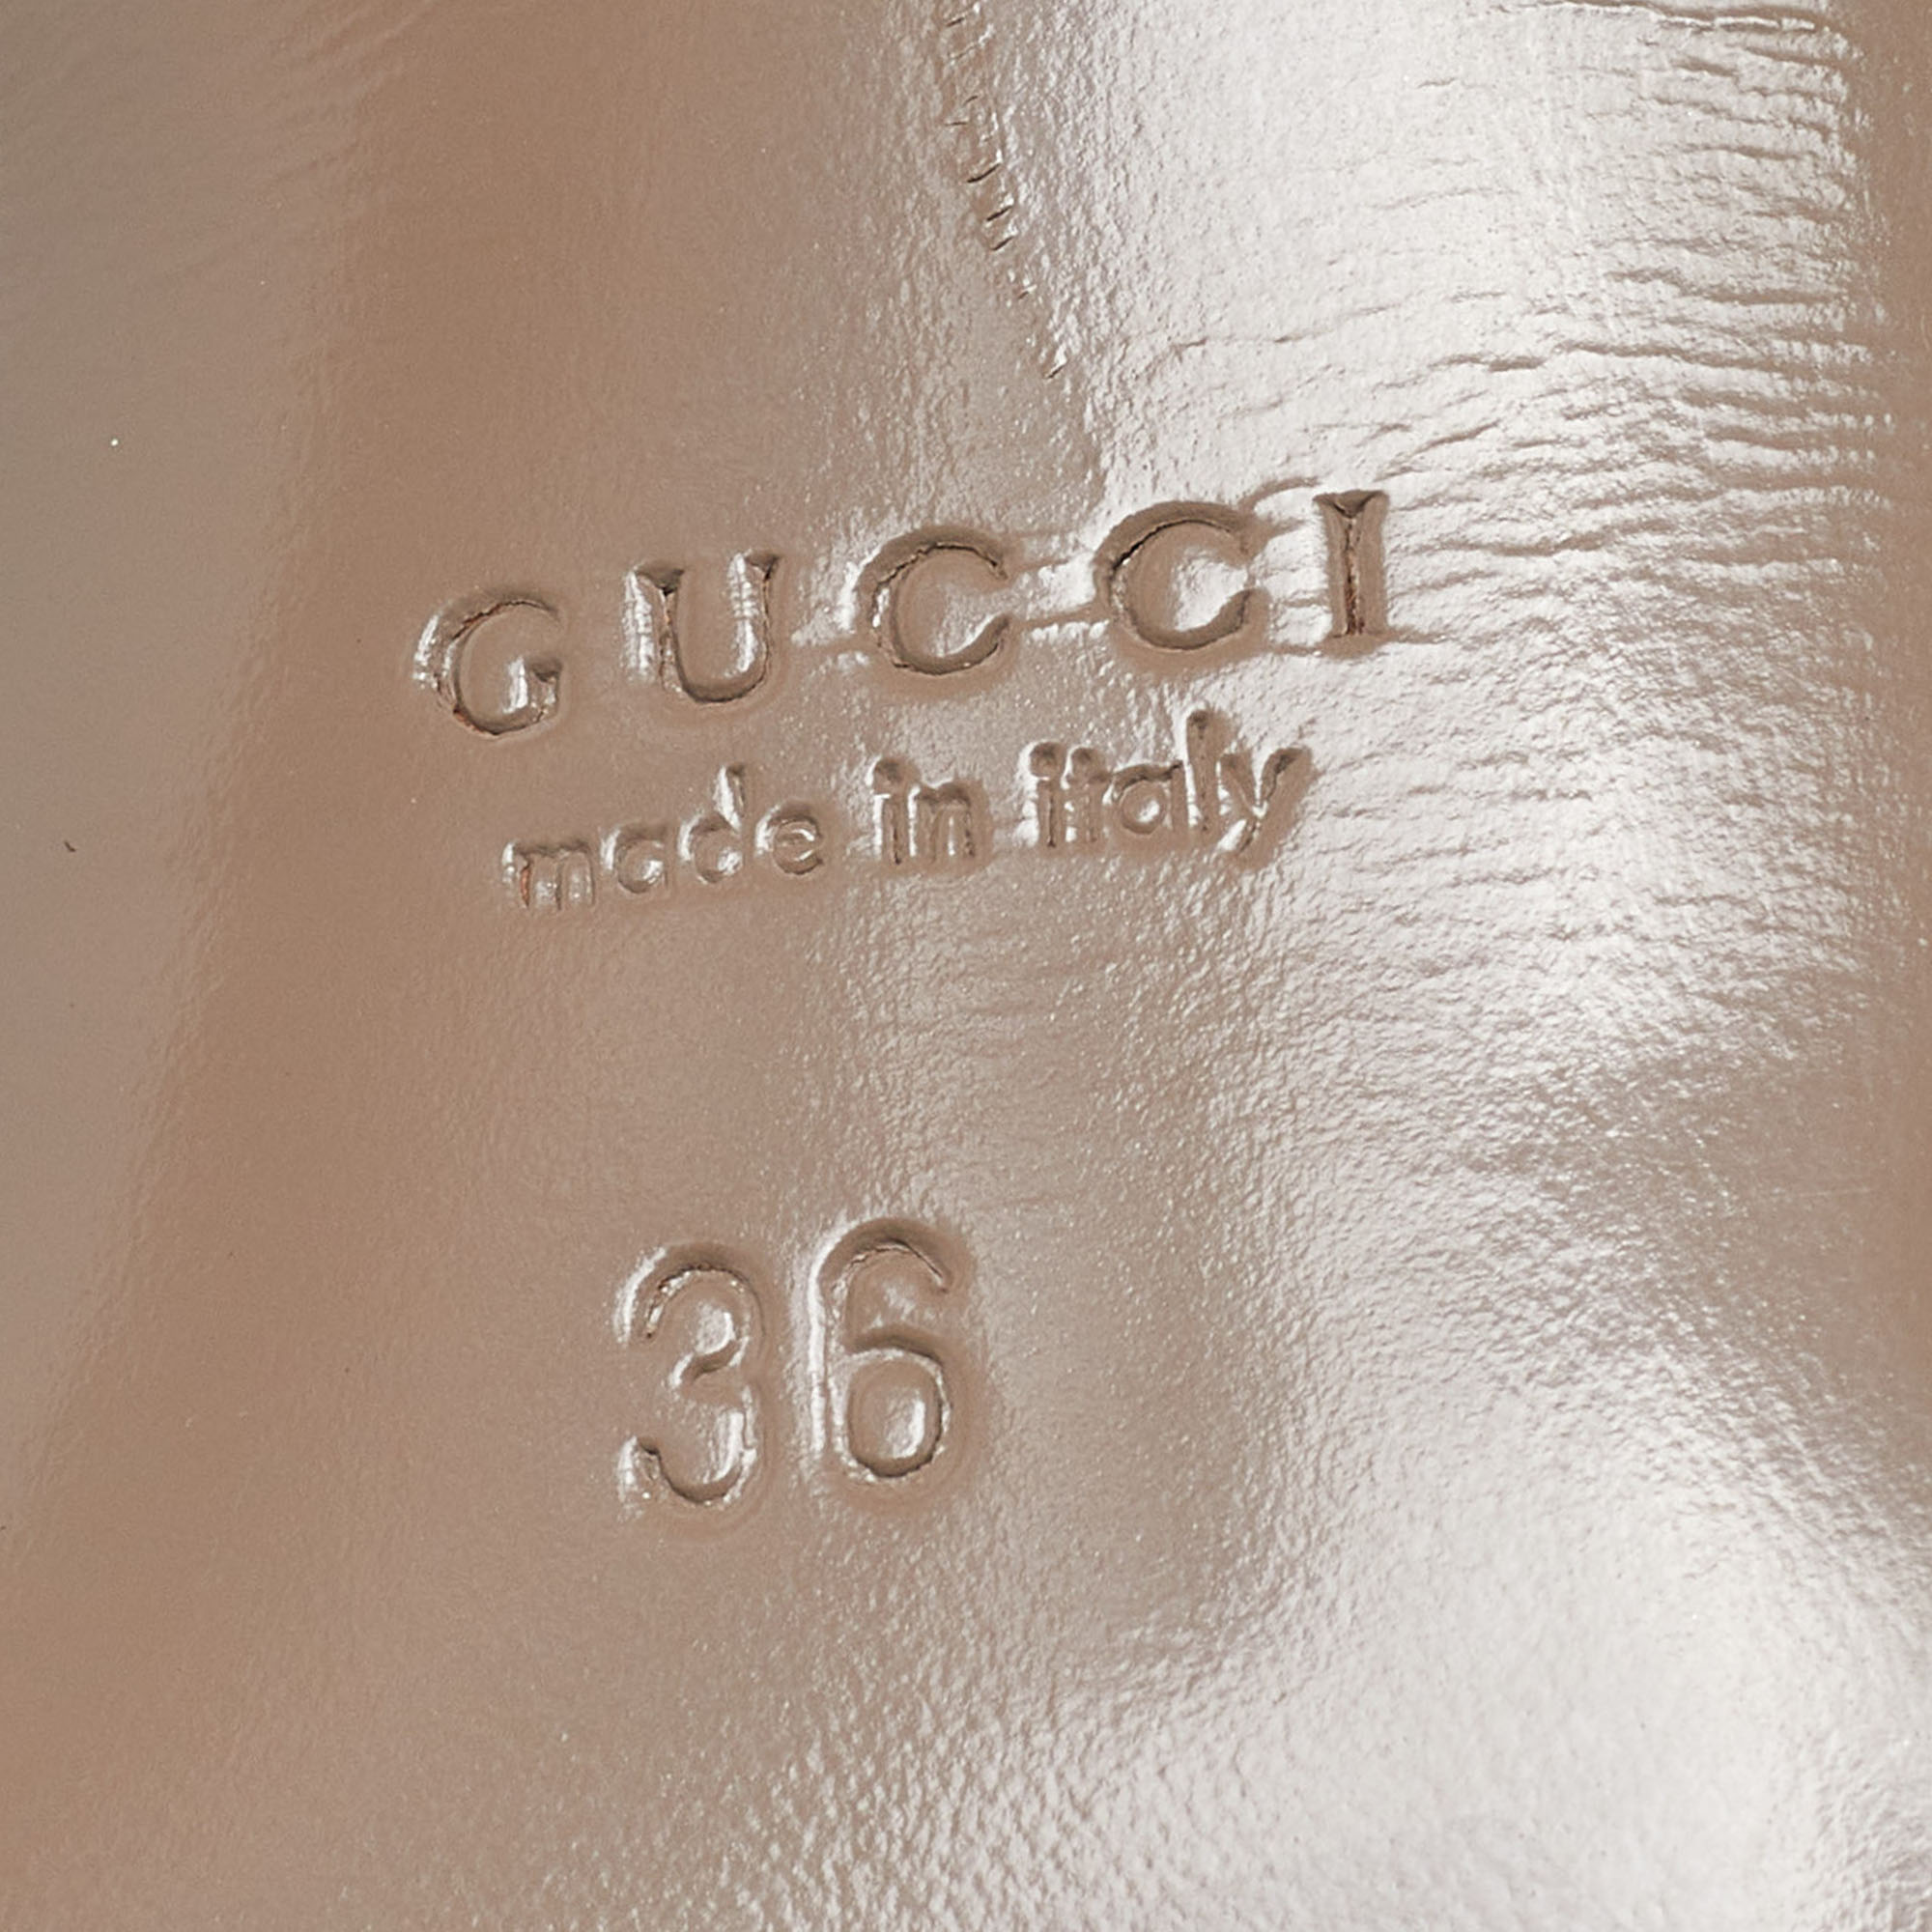 Gucci Cream Patent Leather Ursula Horsebit Gladiator Sandals Size 36